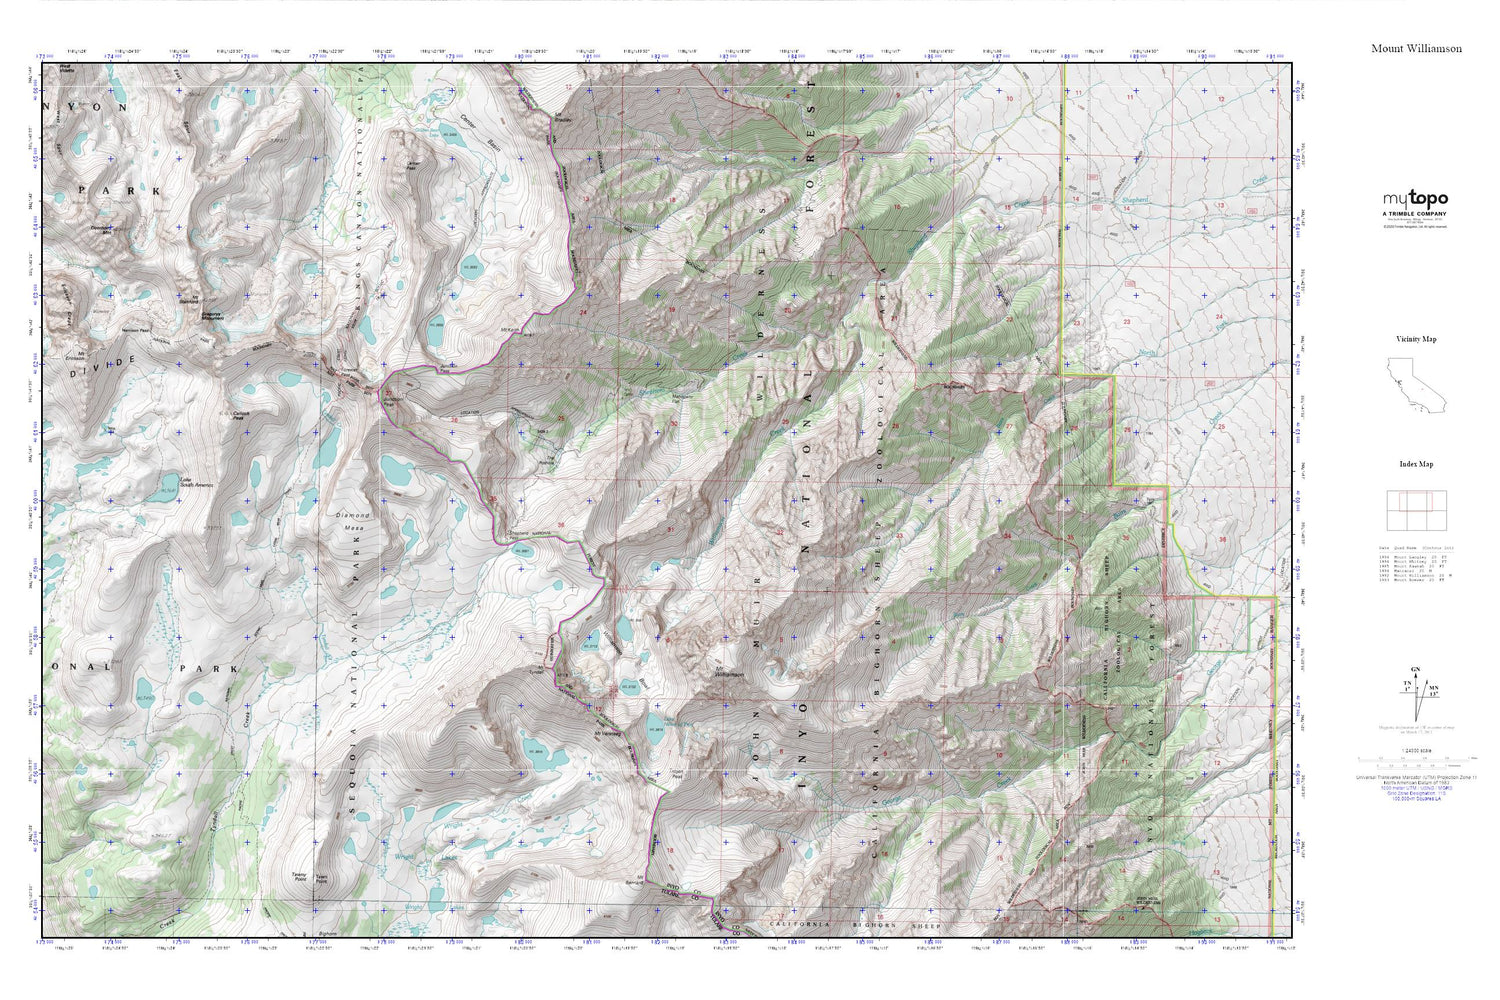 Mount Williamson MyTopo Explorer Series Map Image